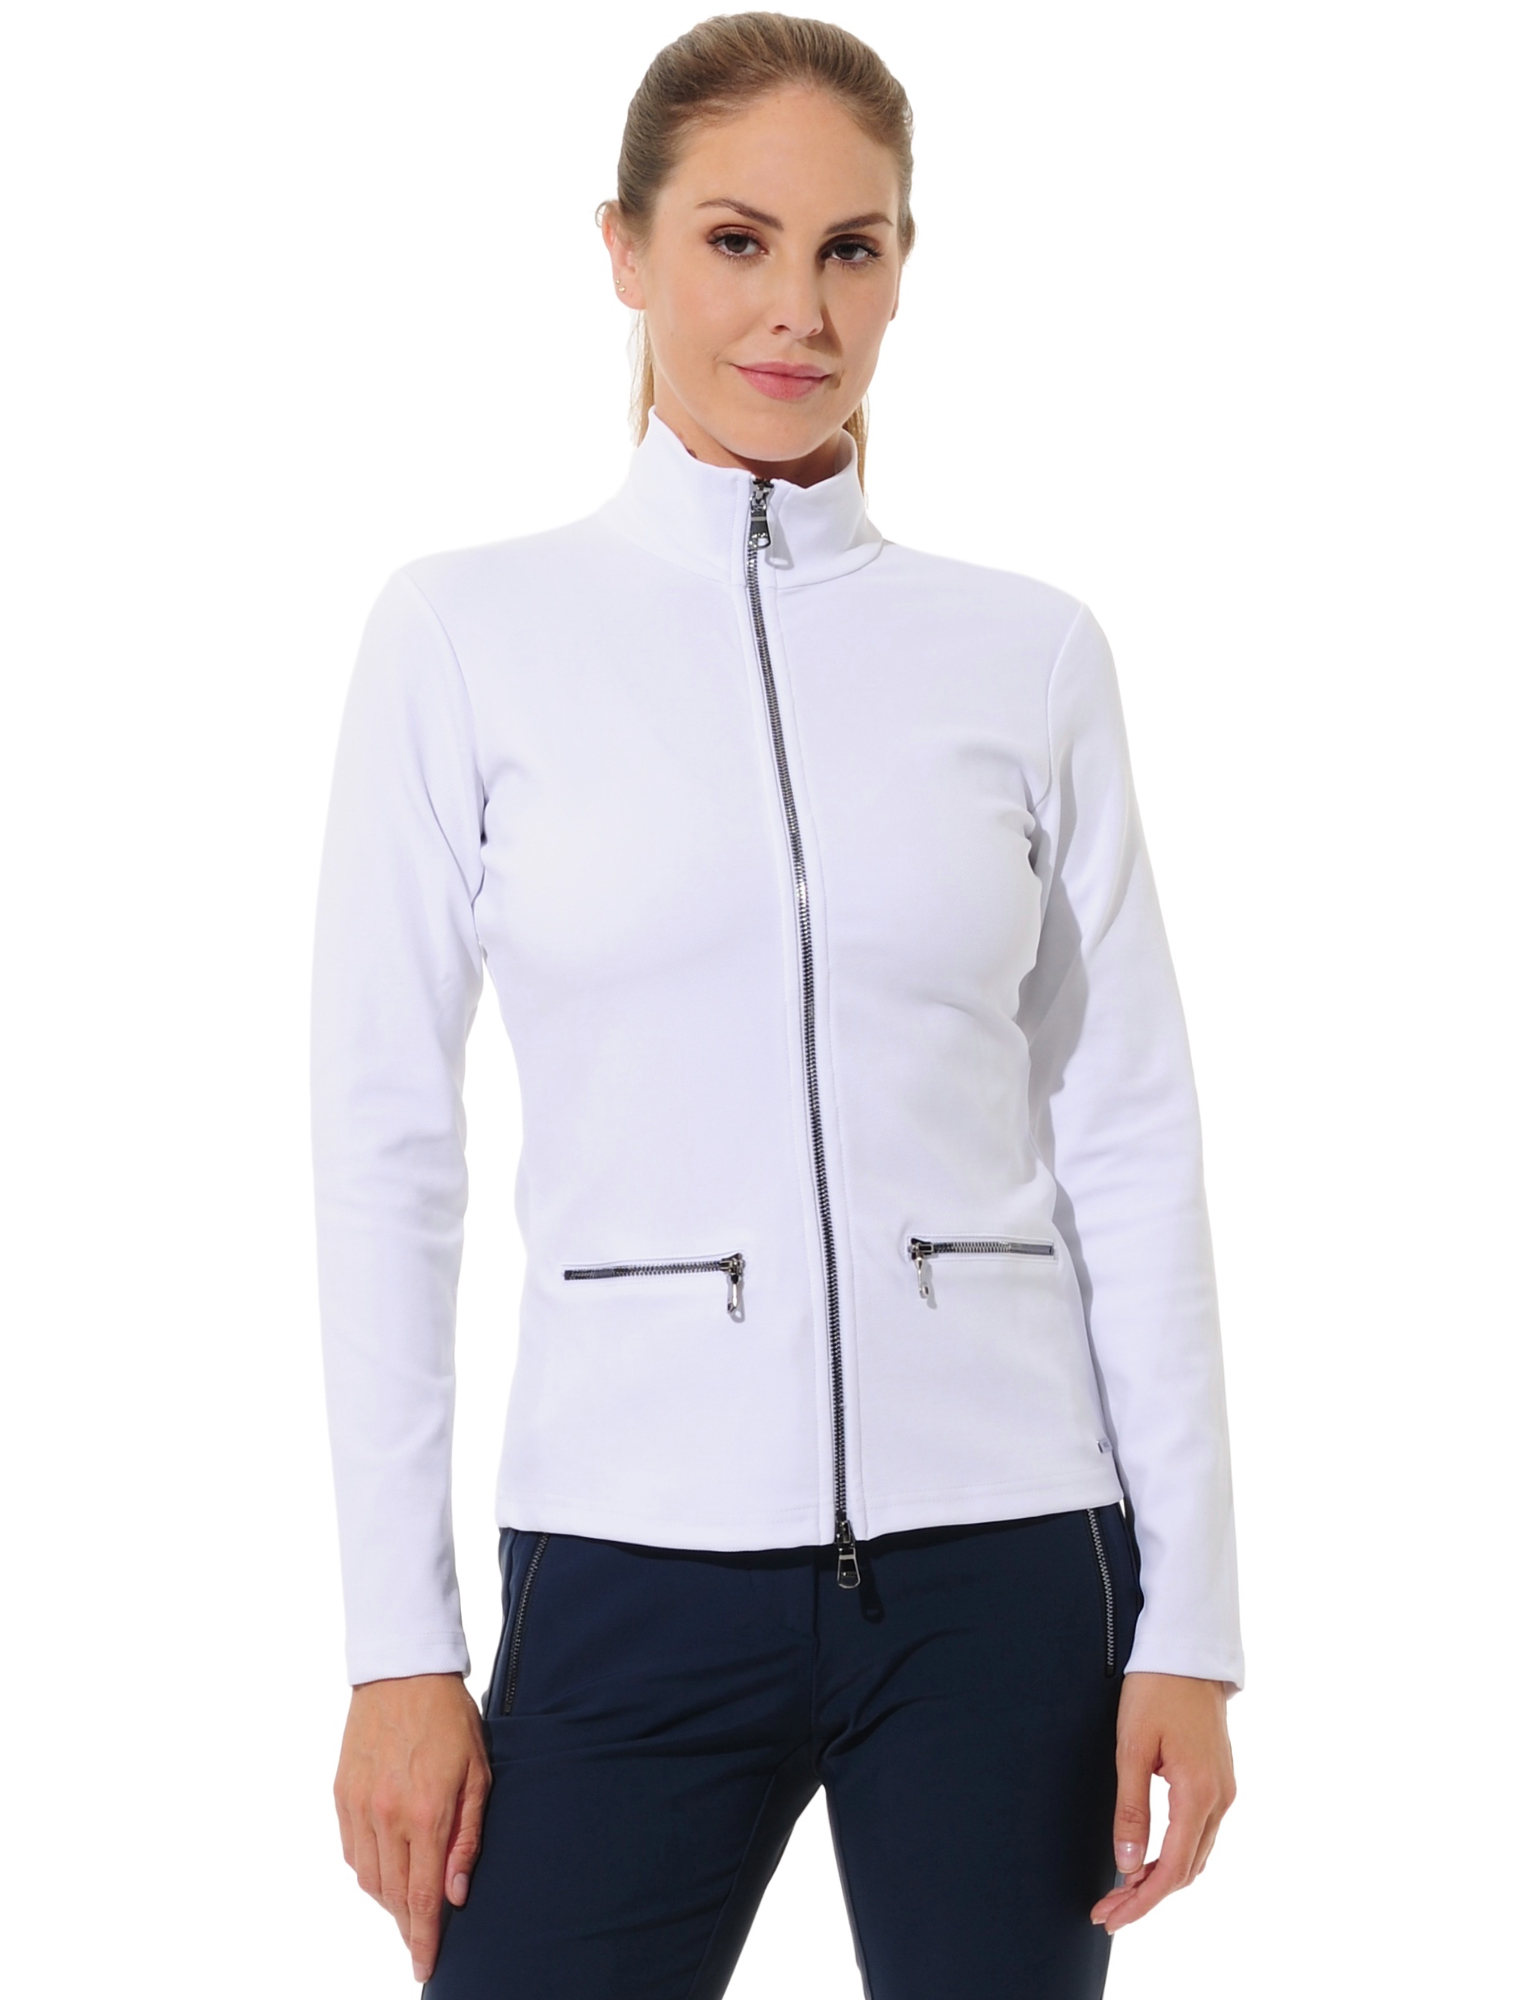 Cord stretch jacket white